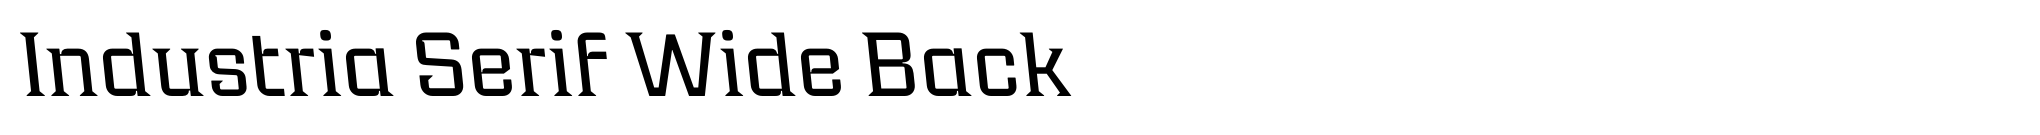 Industria Serif Wide Back image